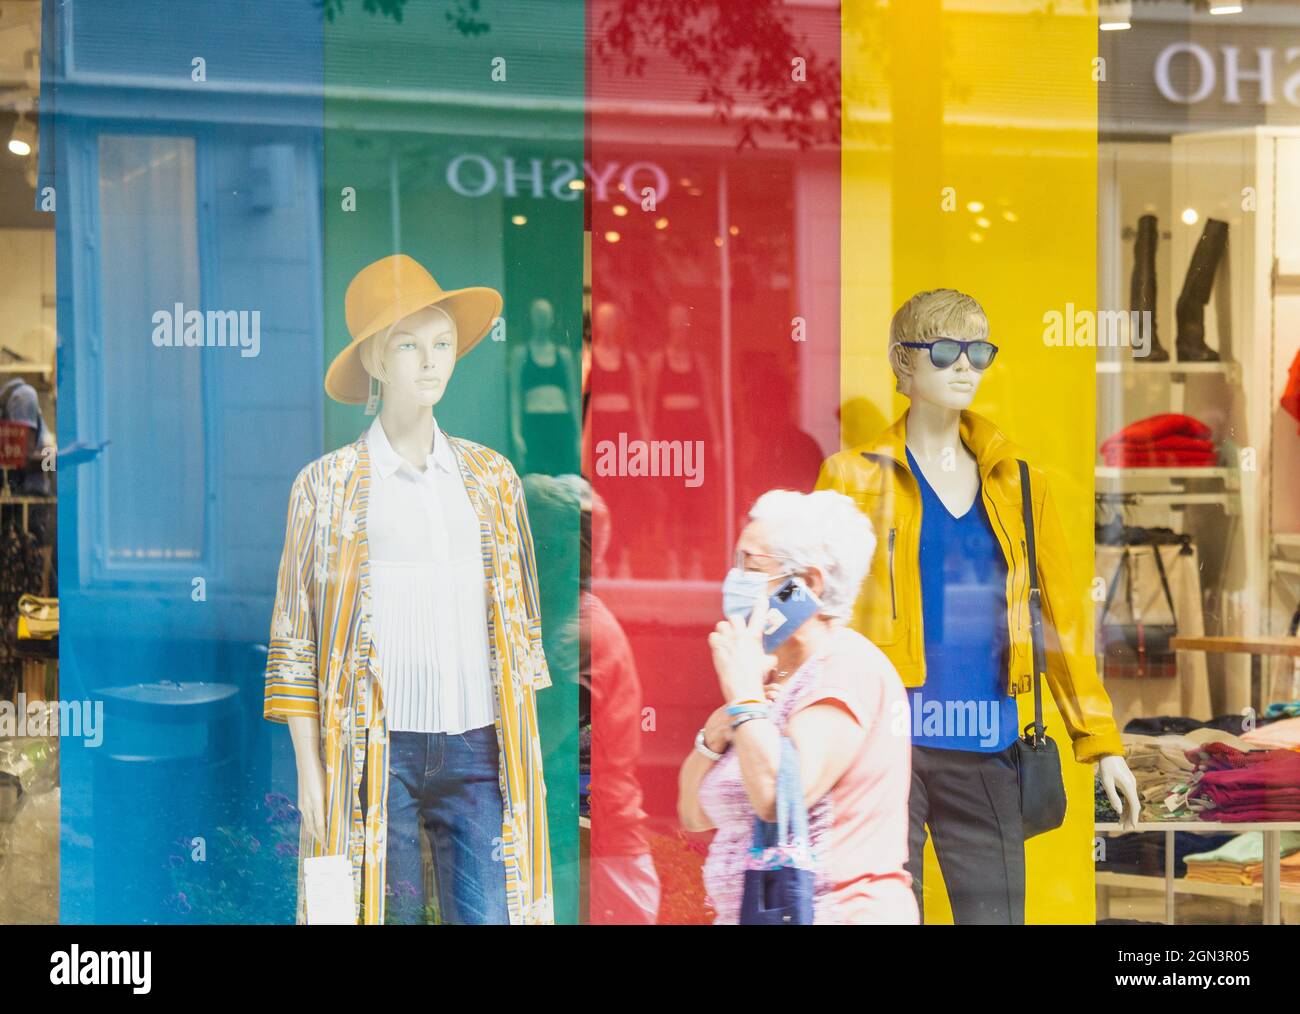 Benetton store in Spain Stock Photo - Alamy